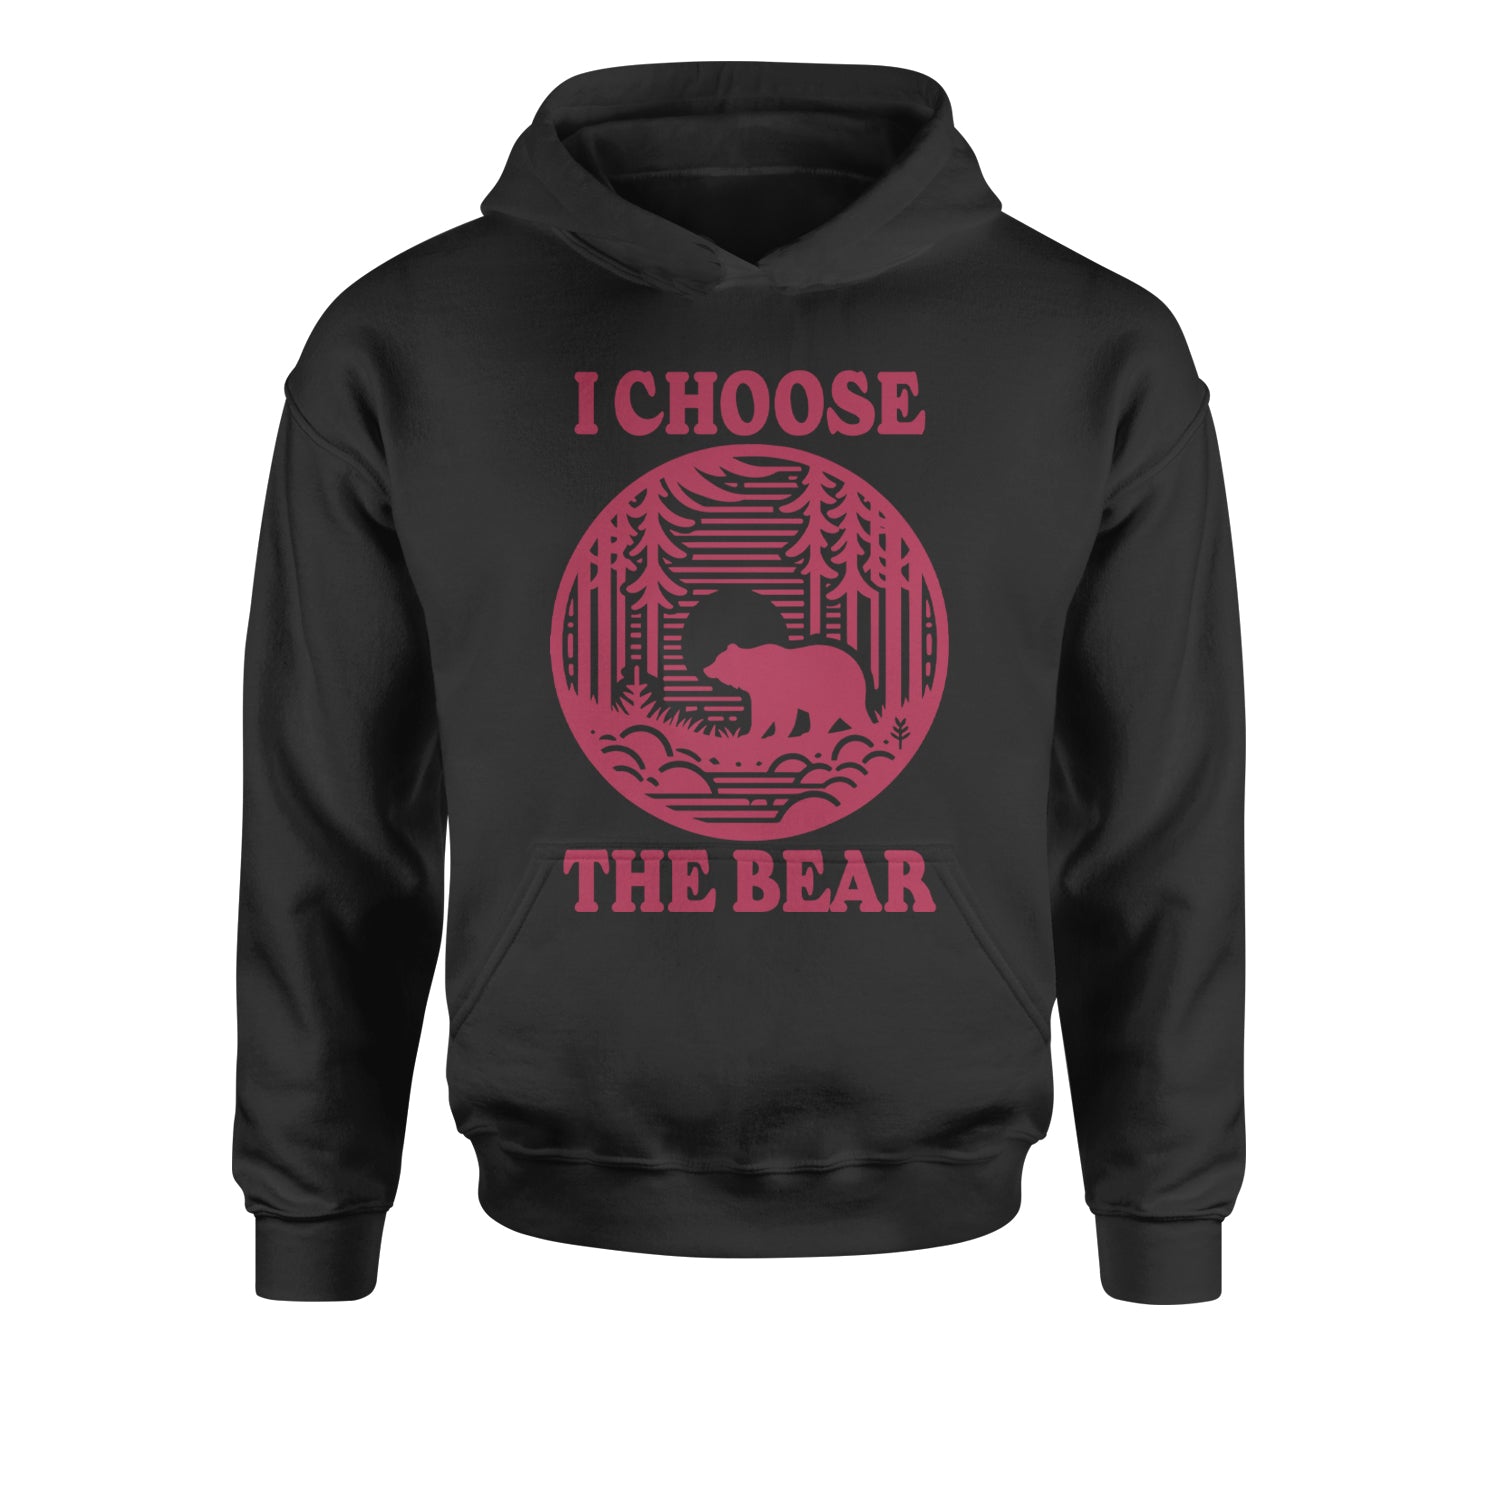 I Choose The Bear Companion Survival Choice Youth-Sized Hoodie